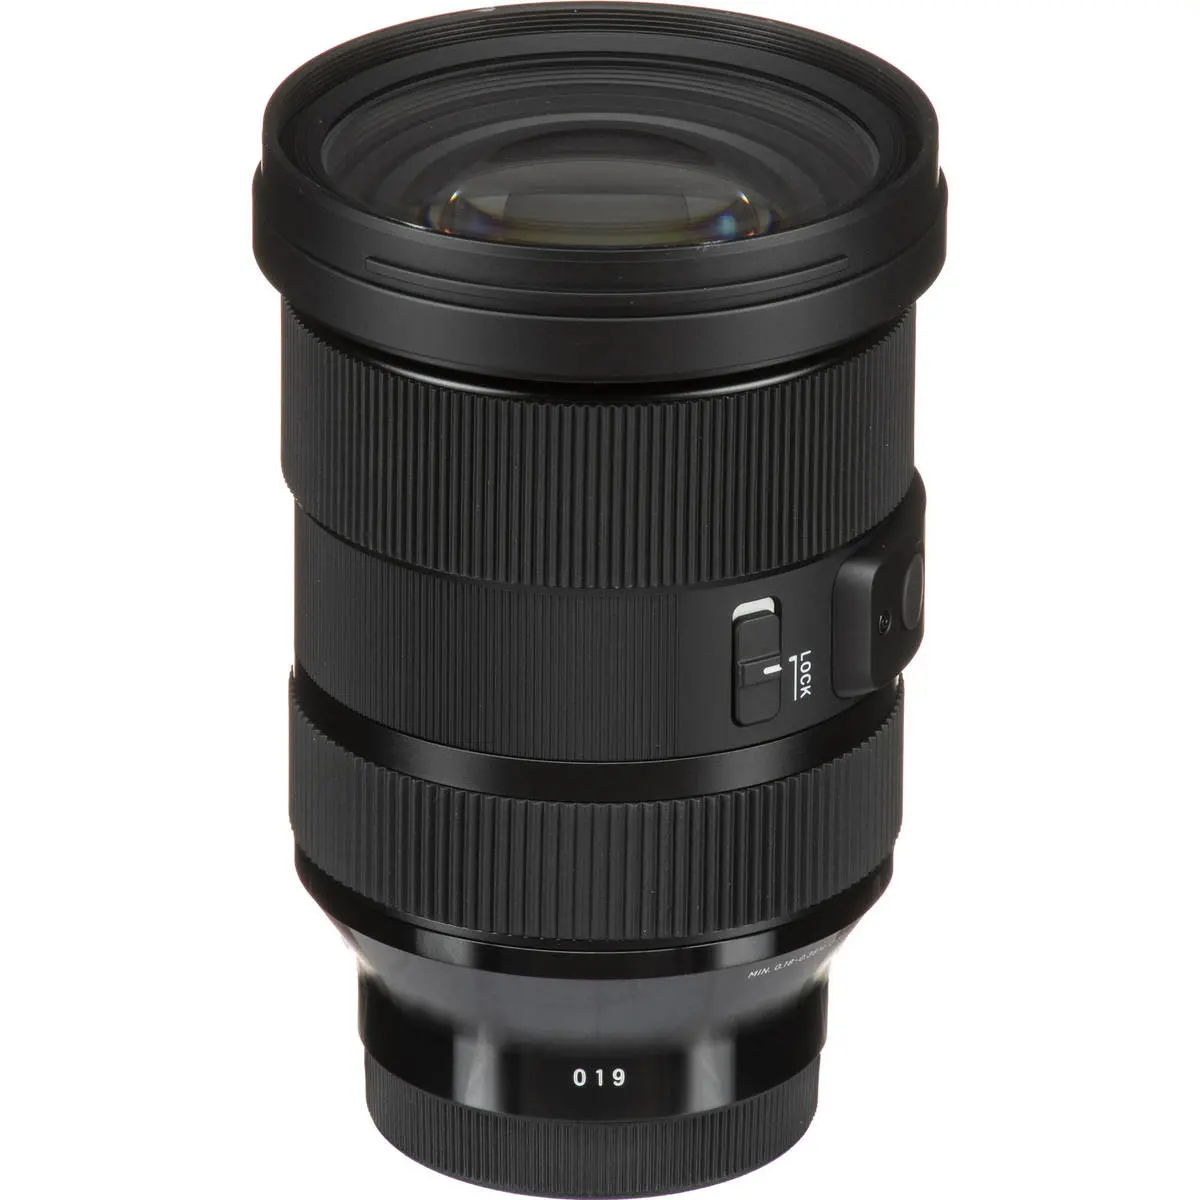 4. Sigma 24-70mm F2.8 DG DN | Art (E-mount) Lens